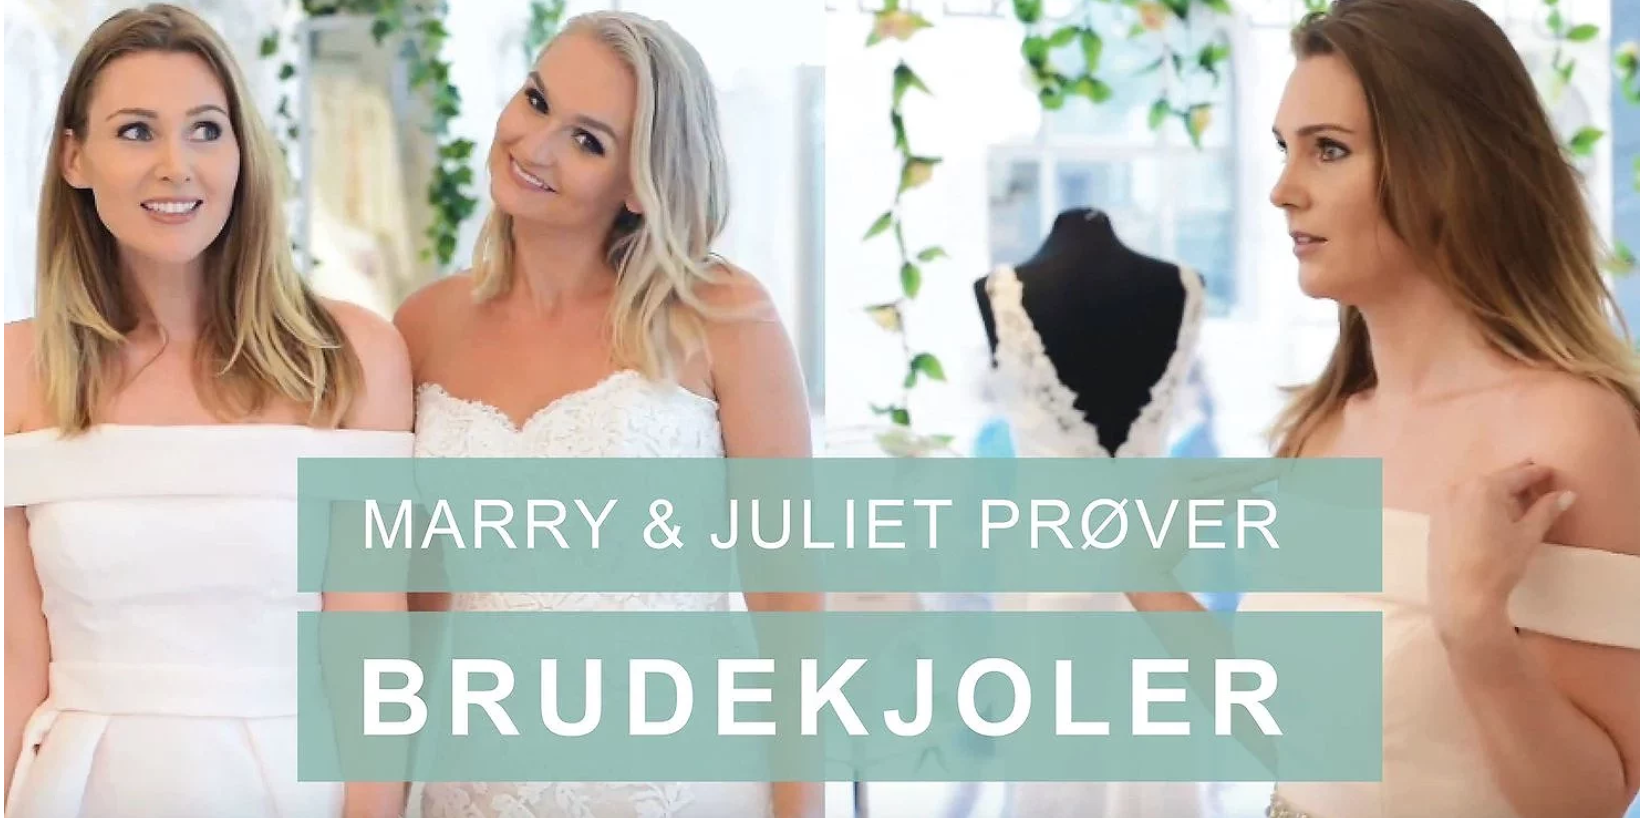 Brudekjole Brudesalong prøvetime marry & juliet